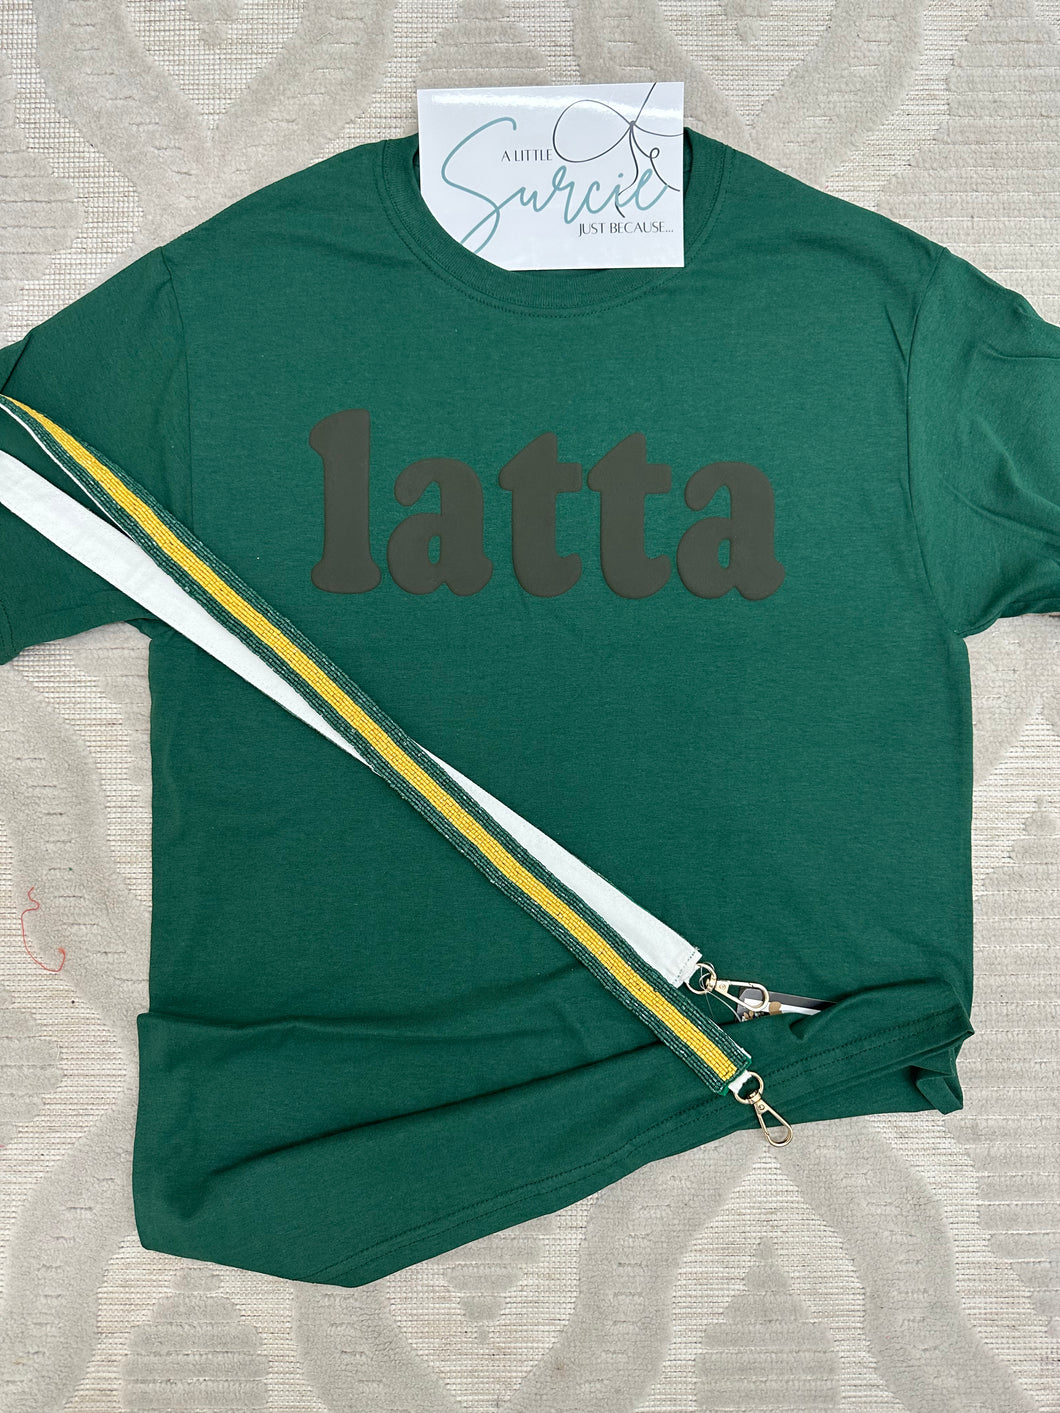 Latta GameDay Tshirts